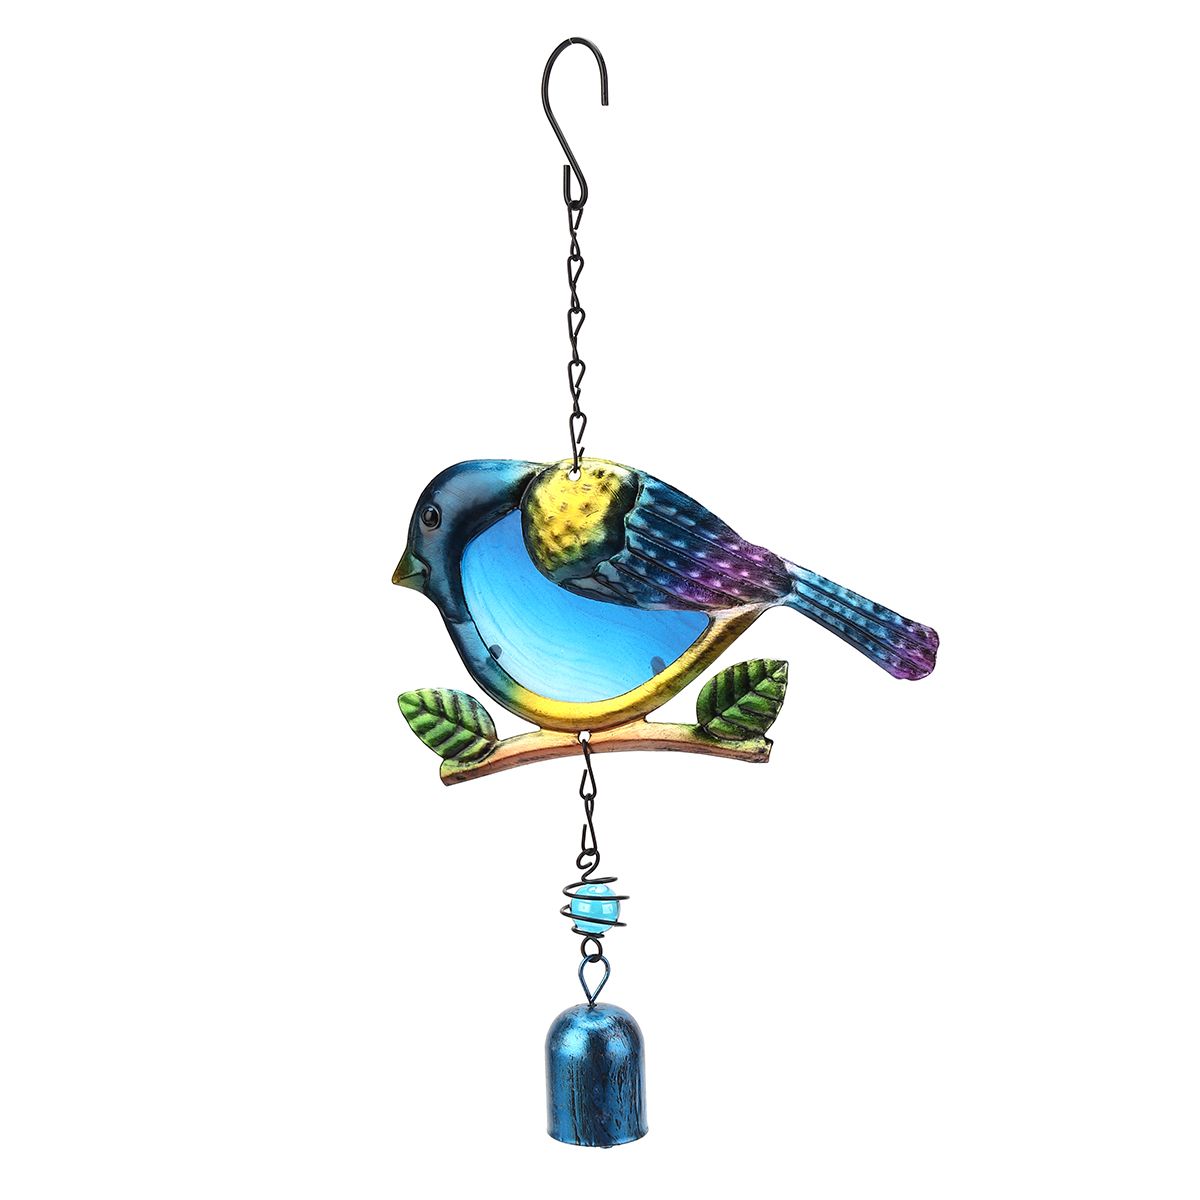 Little-Bird-Garden-Wind-Chime-Creative-Design-Portable--Glass-Wind-Chime-1681774